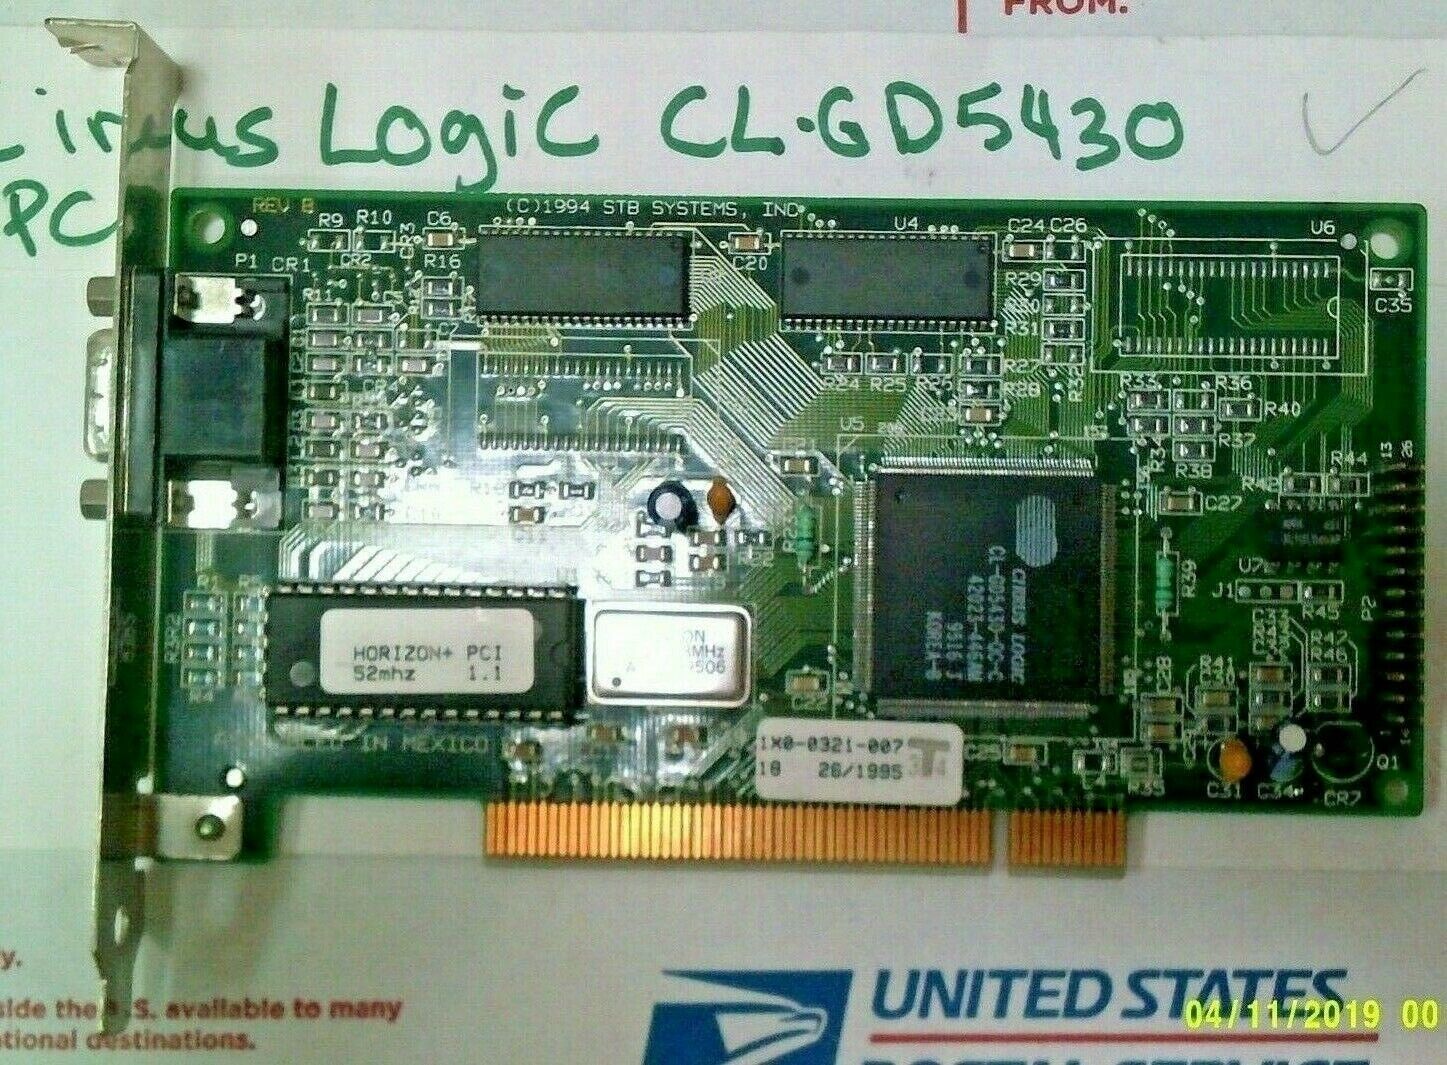 Vintage Cirrus Logic CL-GD5430-QC-C PCI Graphics card 1990's STB 1X-0321-007